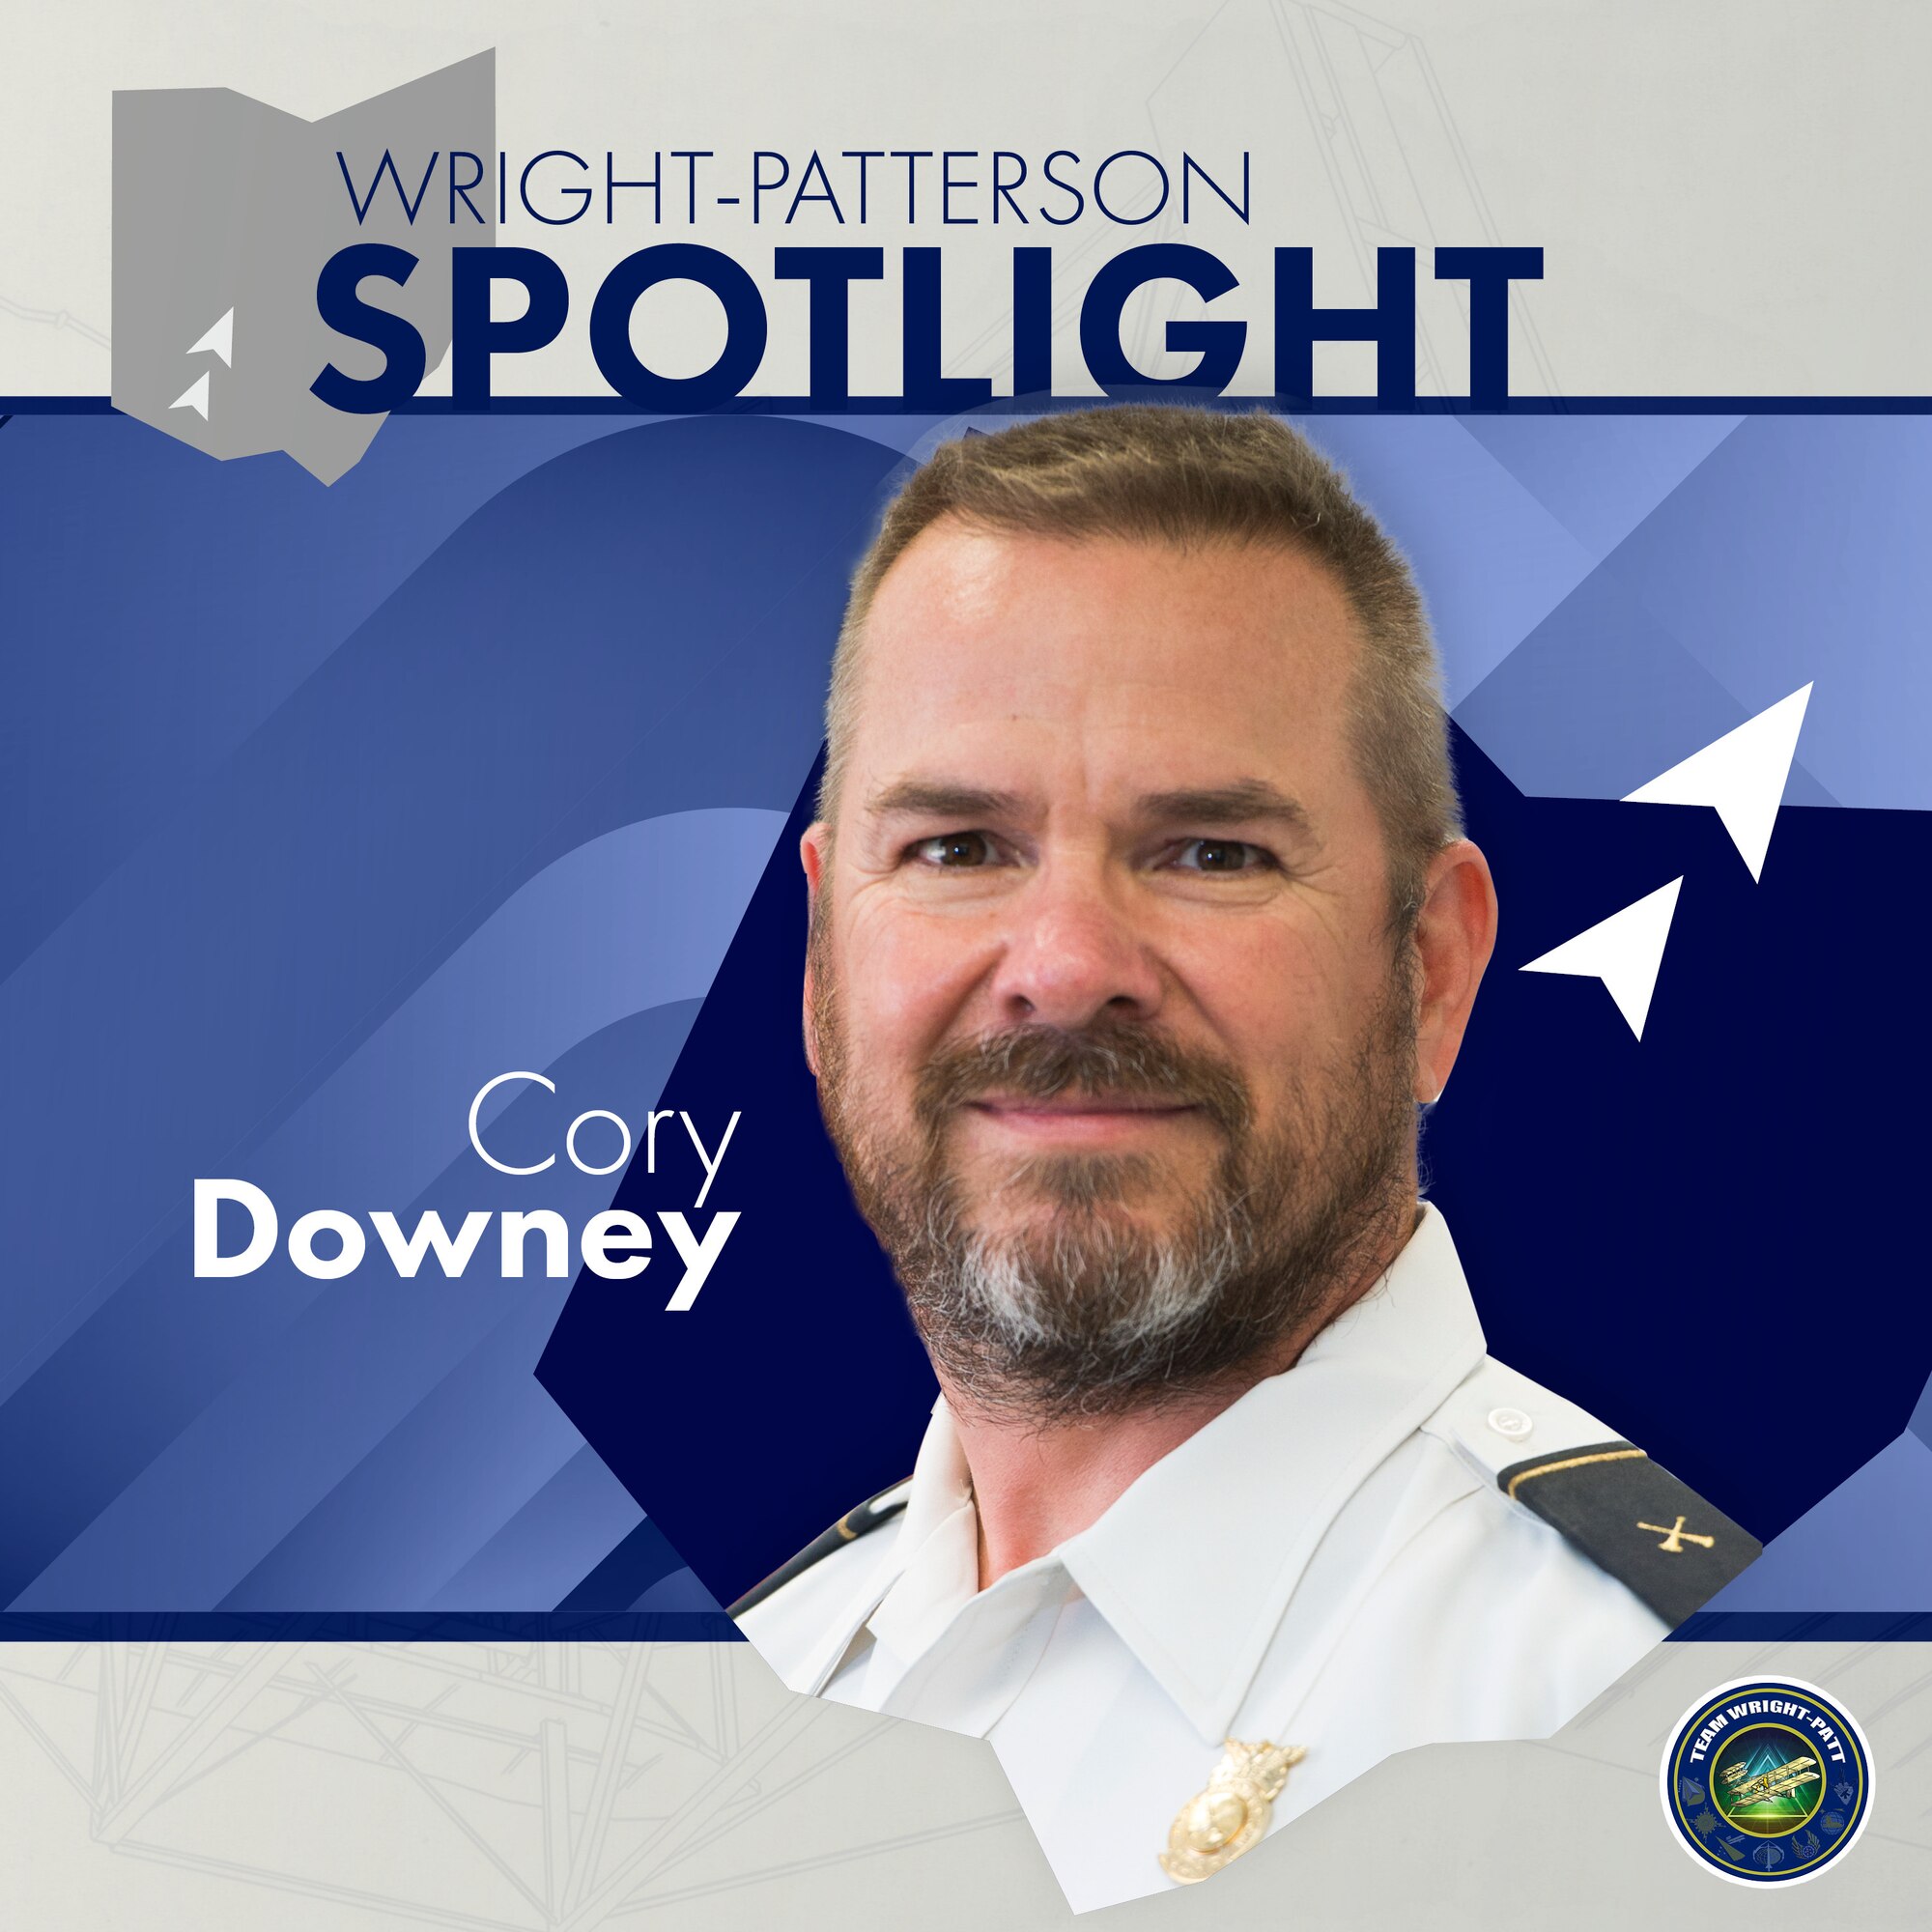 Wright-Patterson Spotlight: Cory Downey